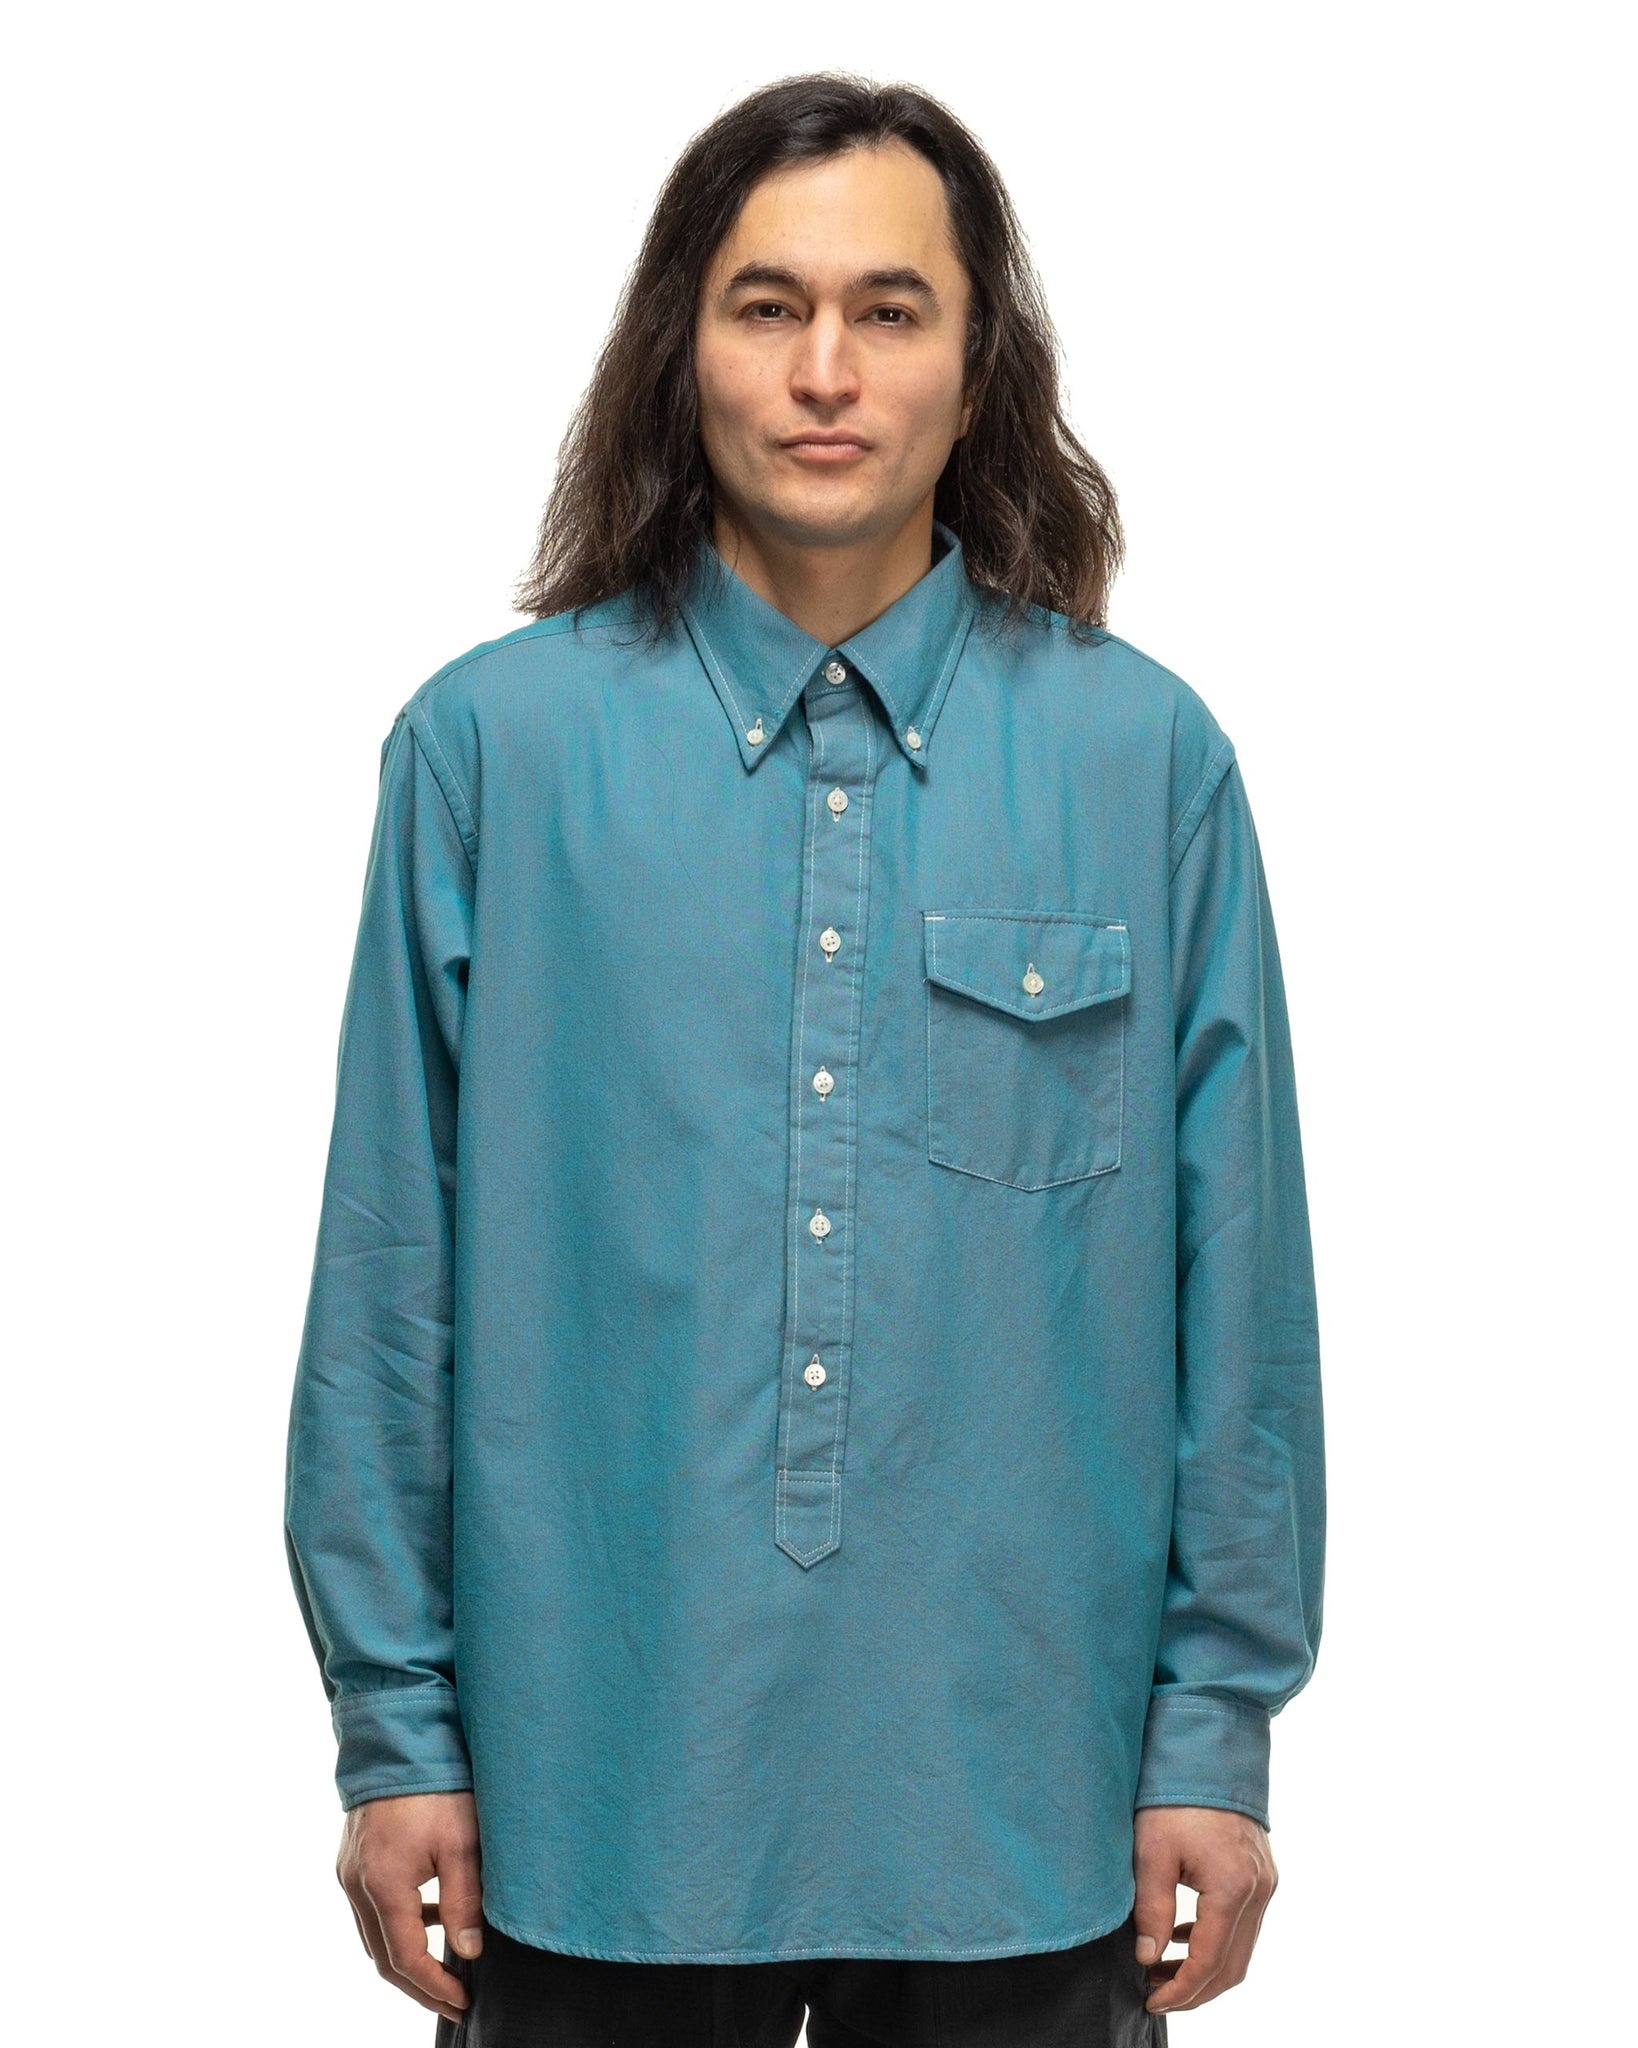 IVY BD Shirt Cotton Iridescent Jade - 4